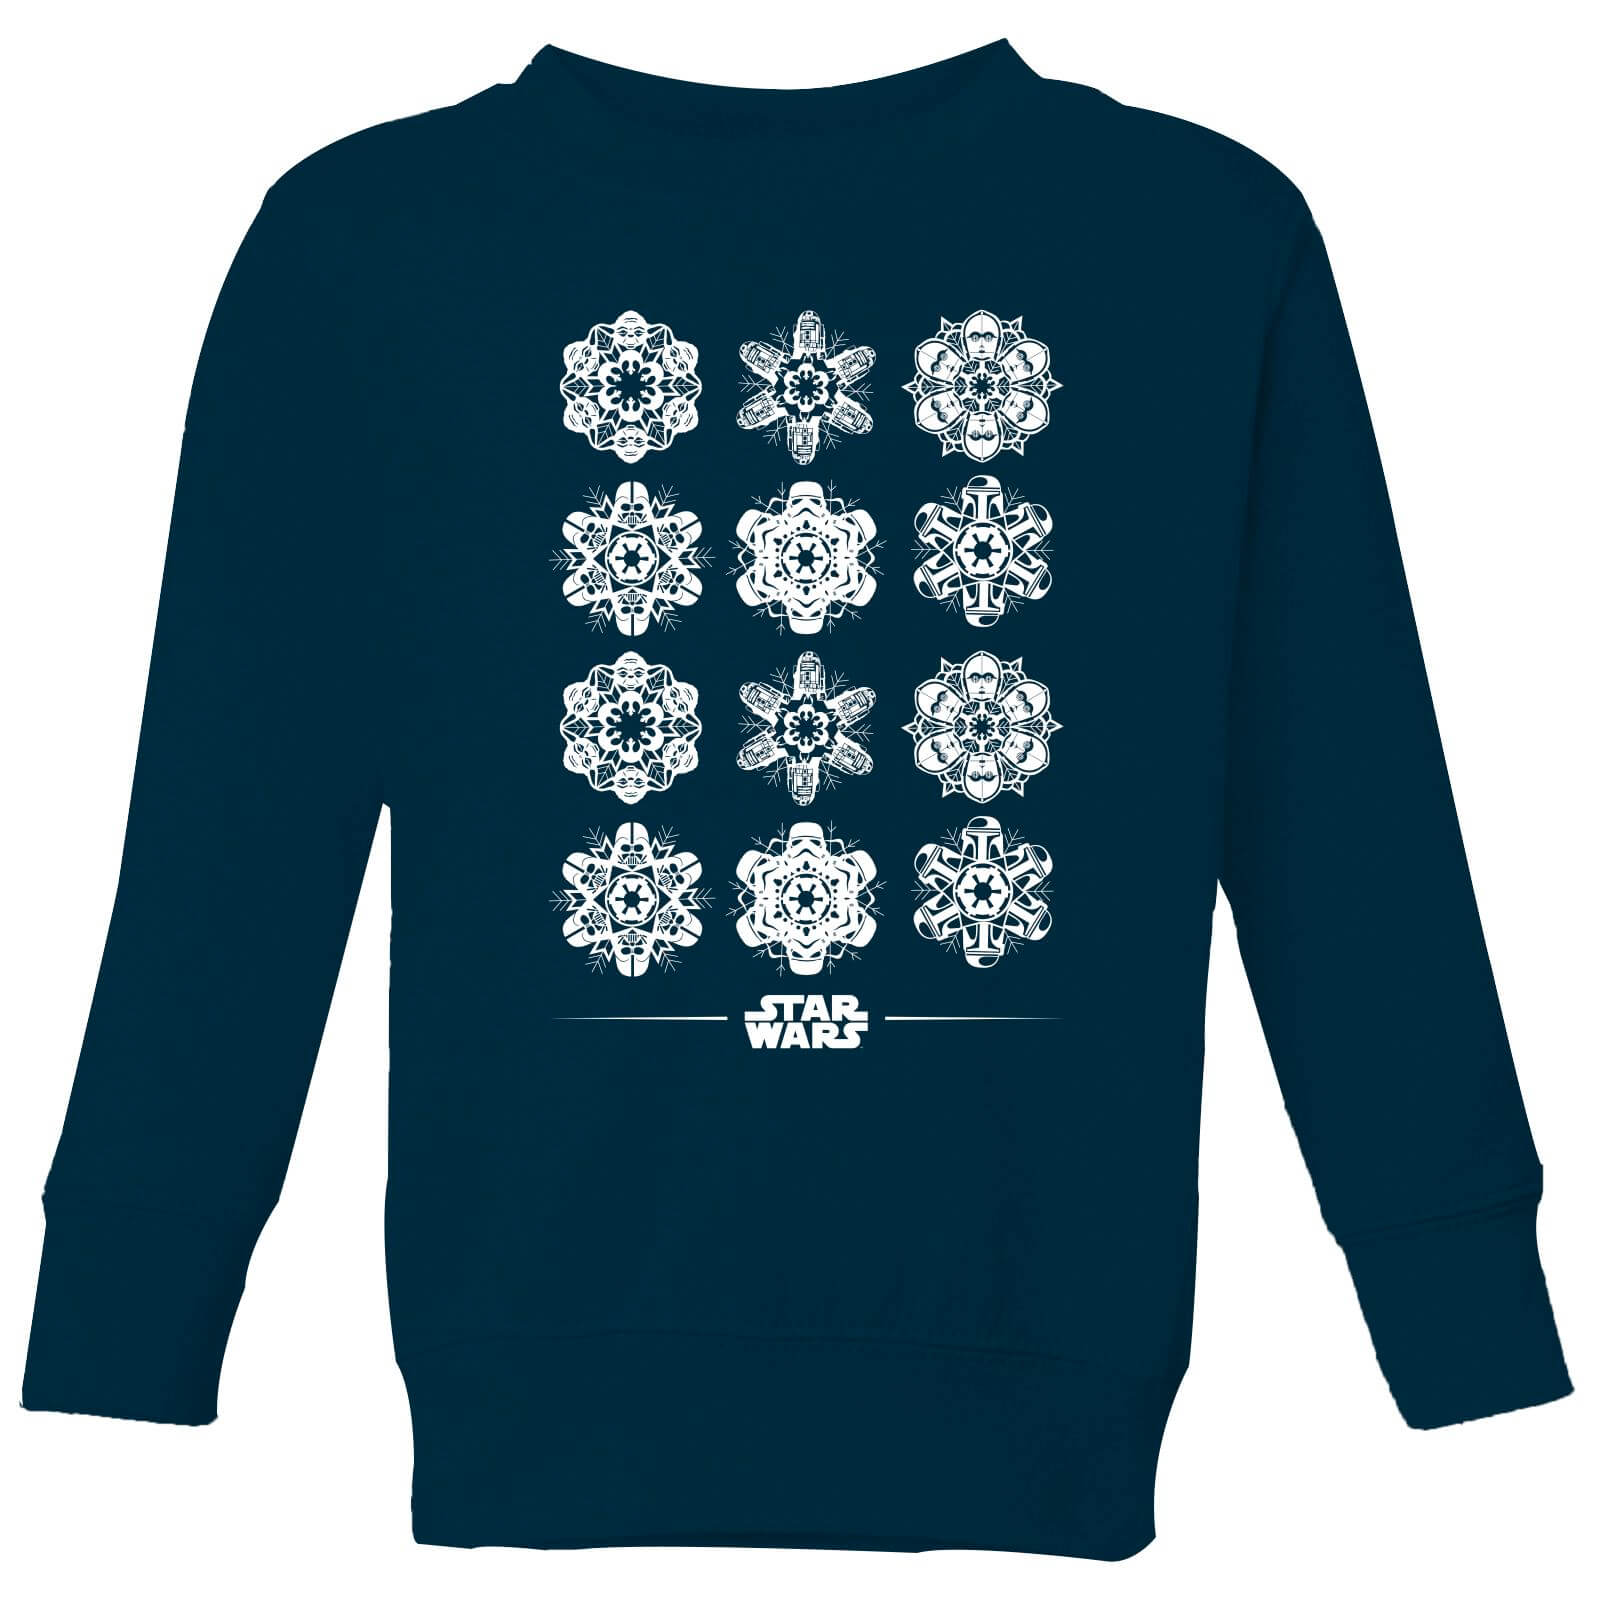 Star Wars Snowflake Kids Christmas Sweatshirt - Navy - 9-10 Years